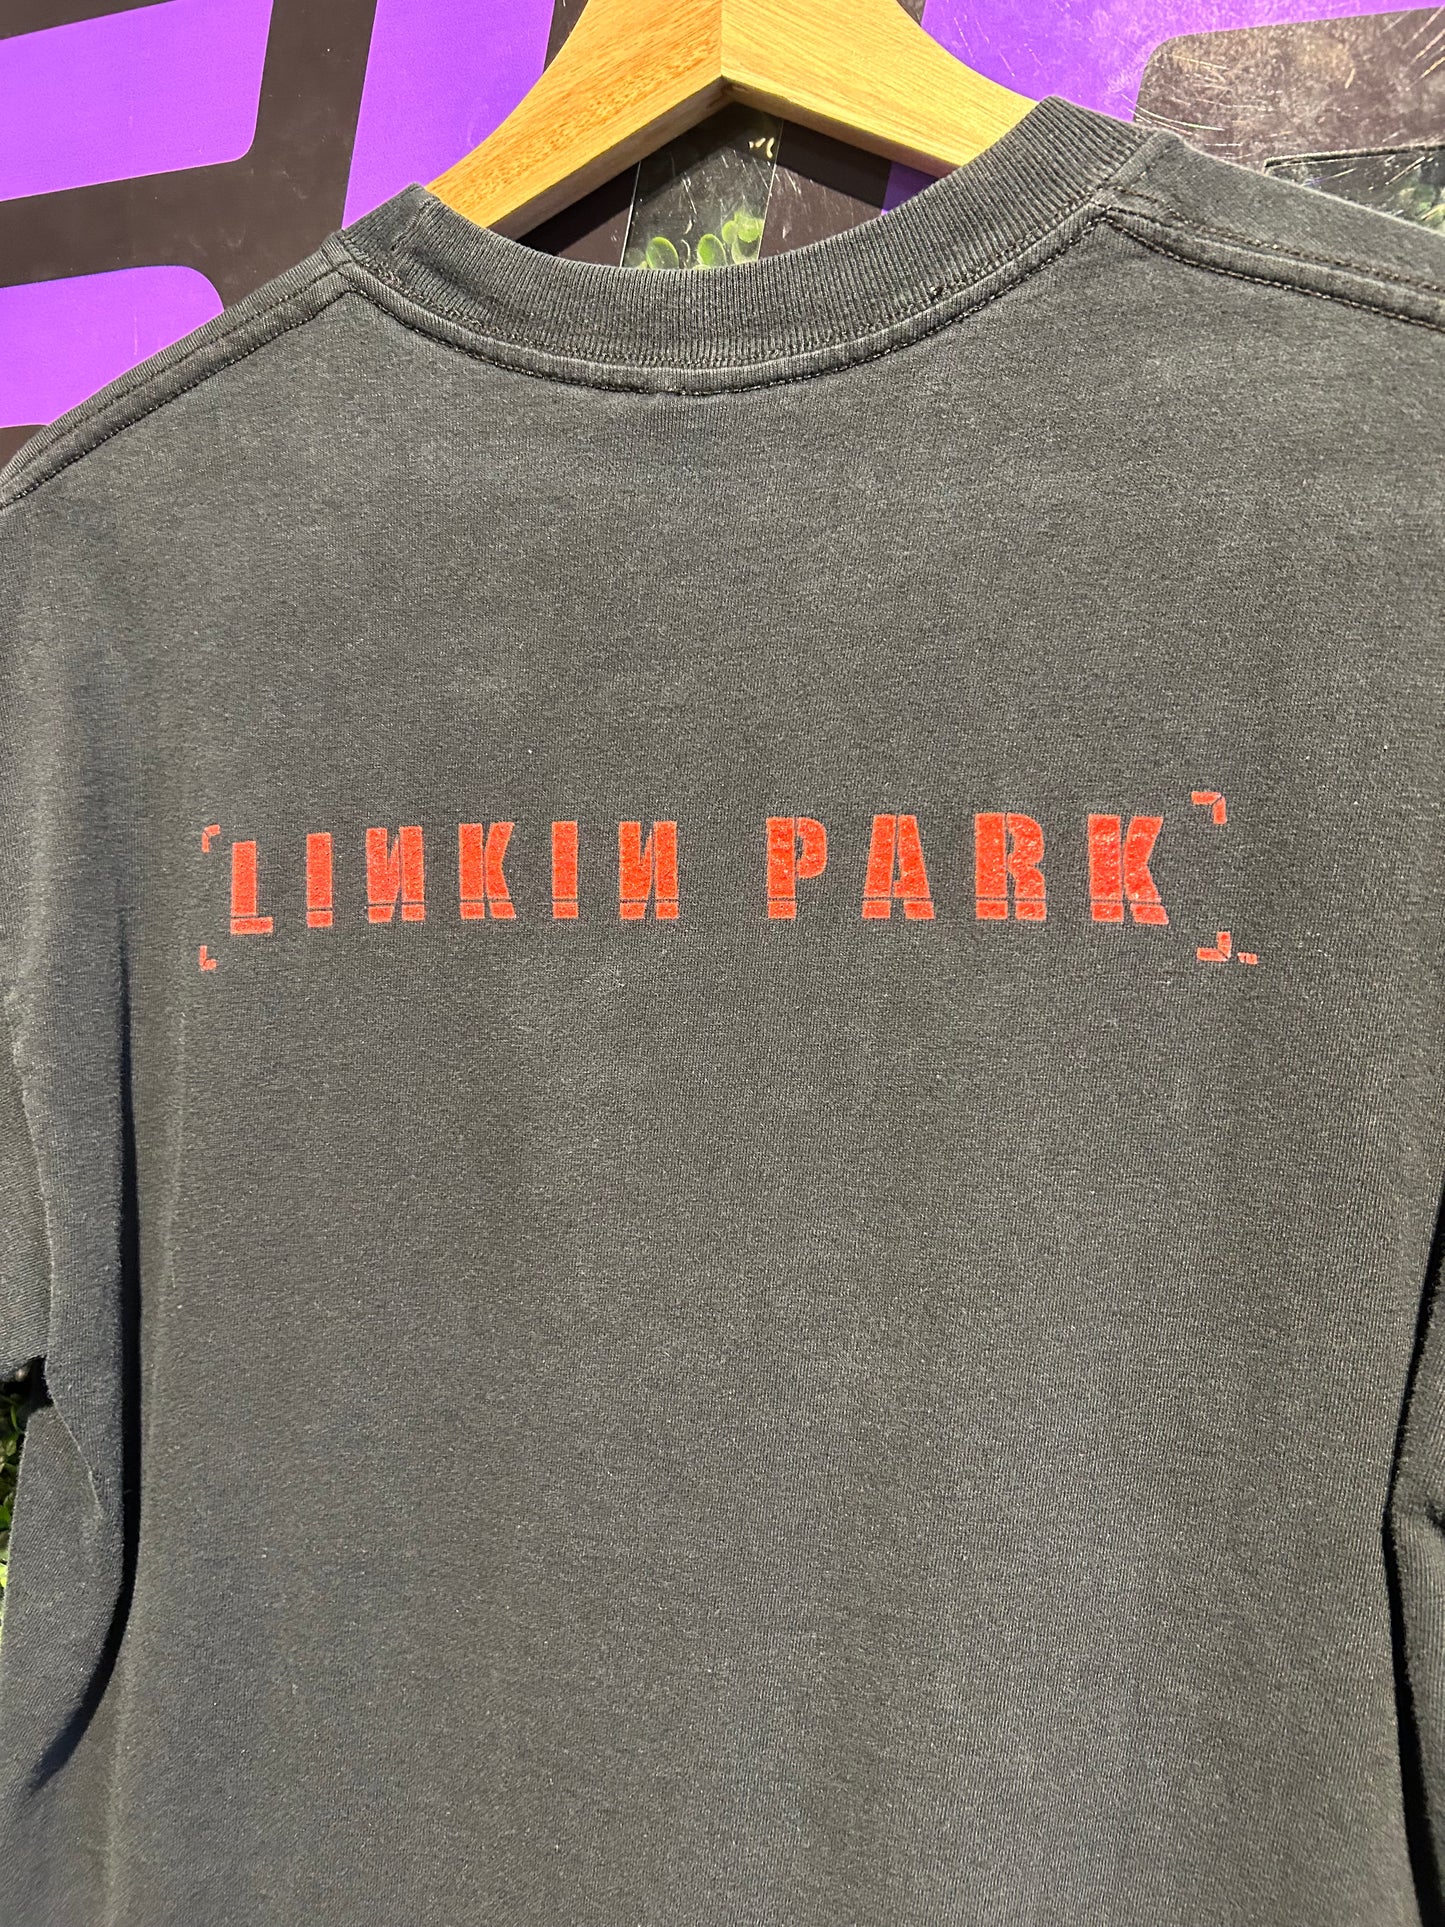 2001 Linkin Park T-Shirt. Size Mediun